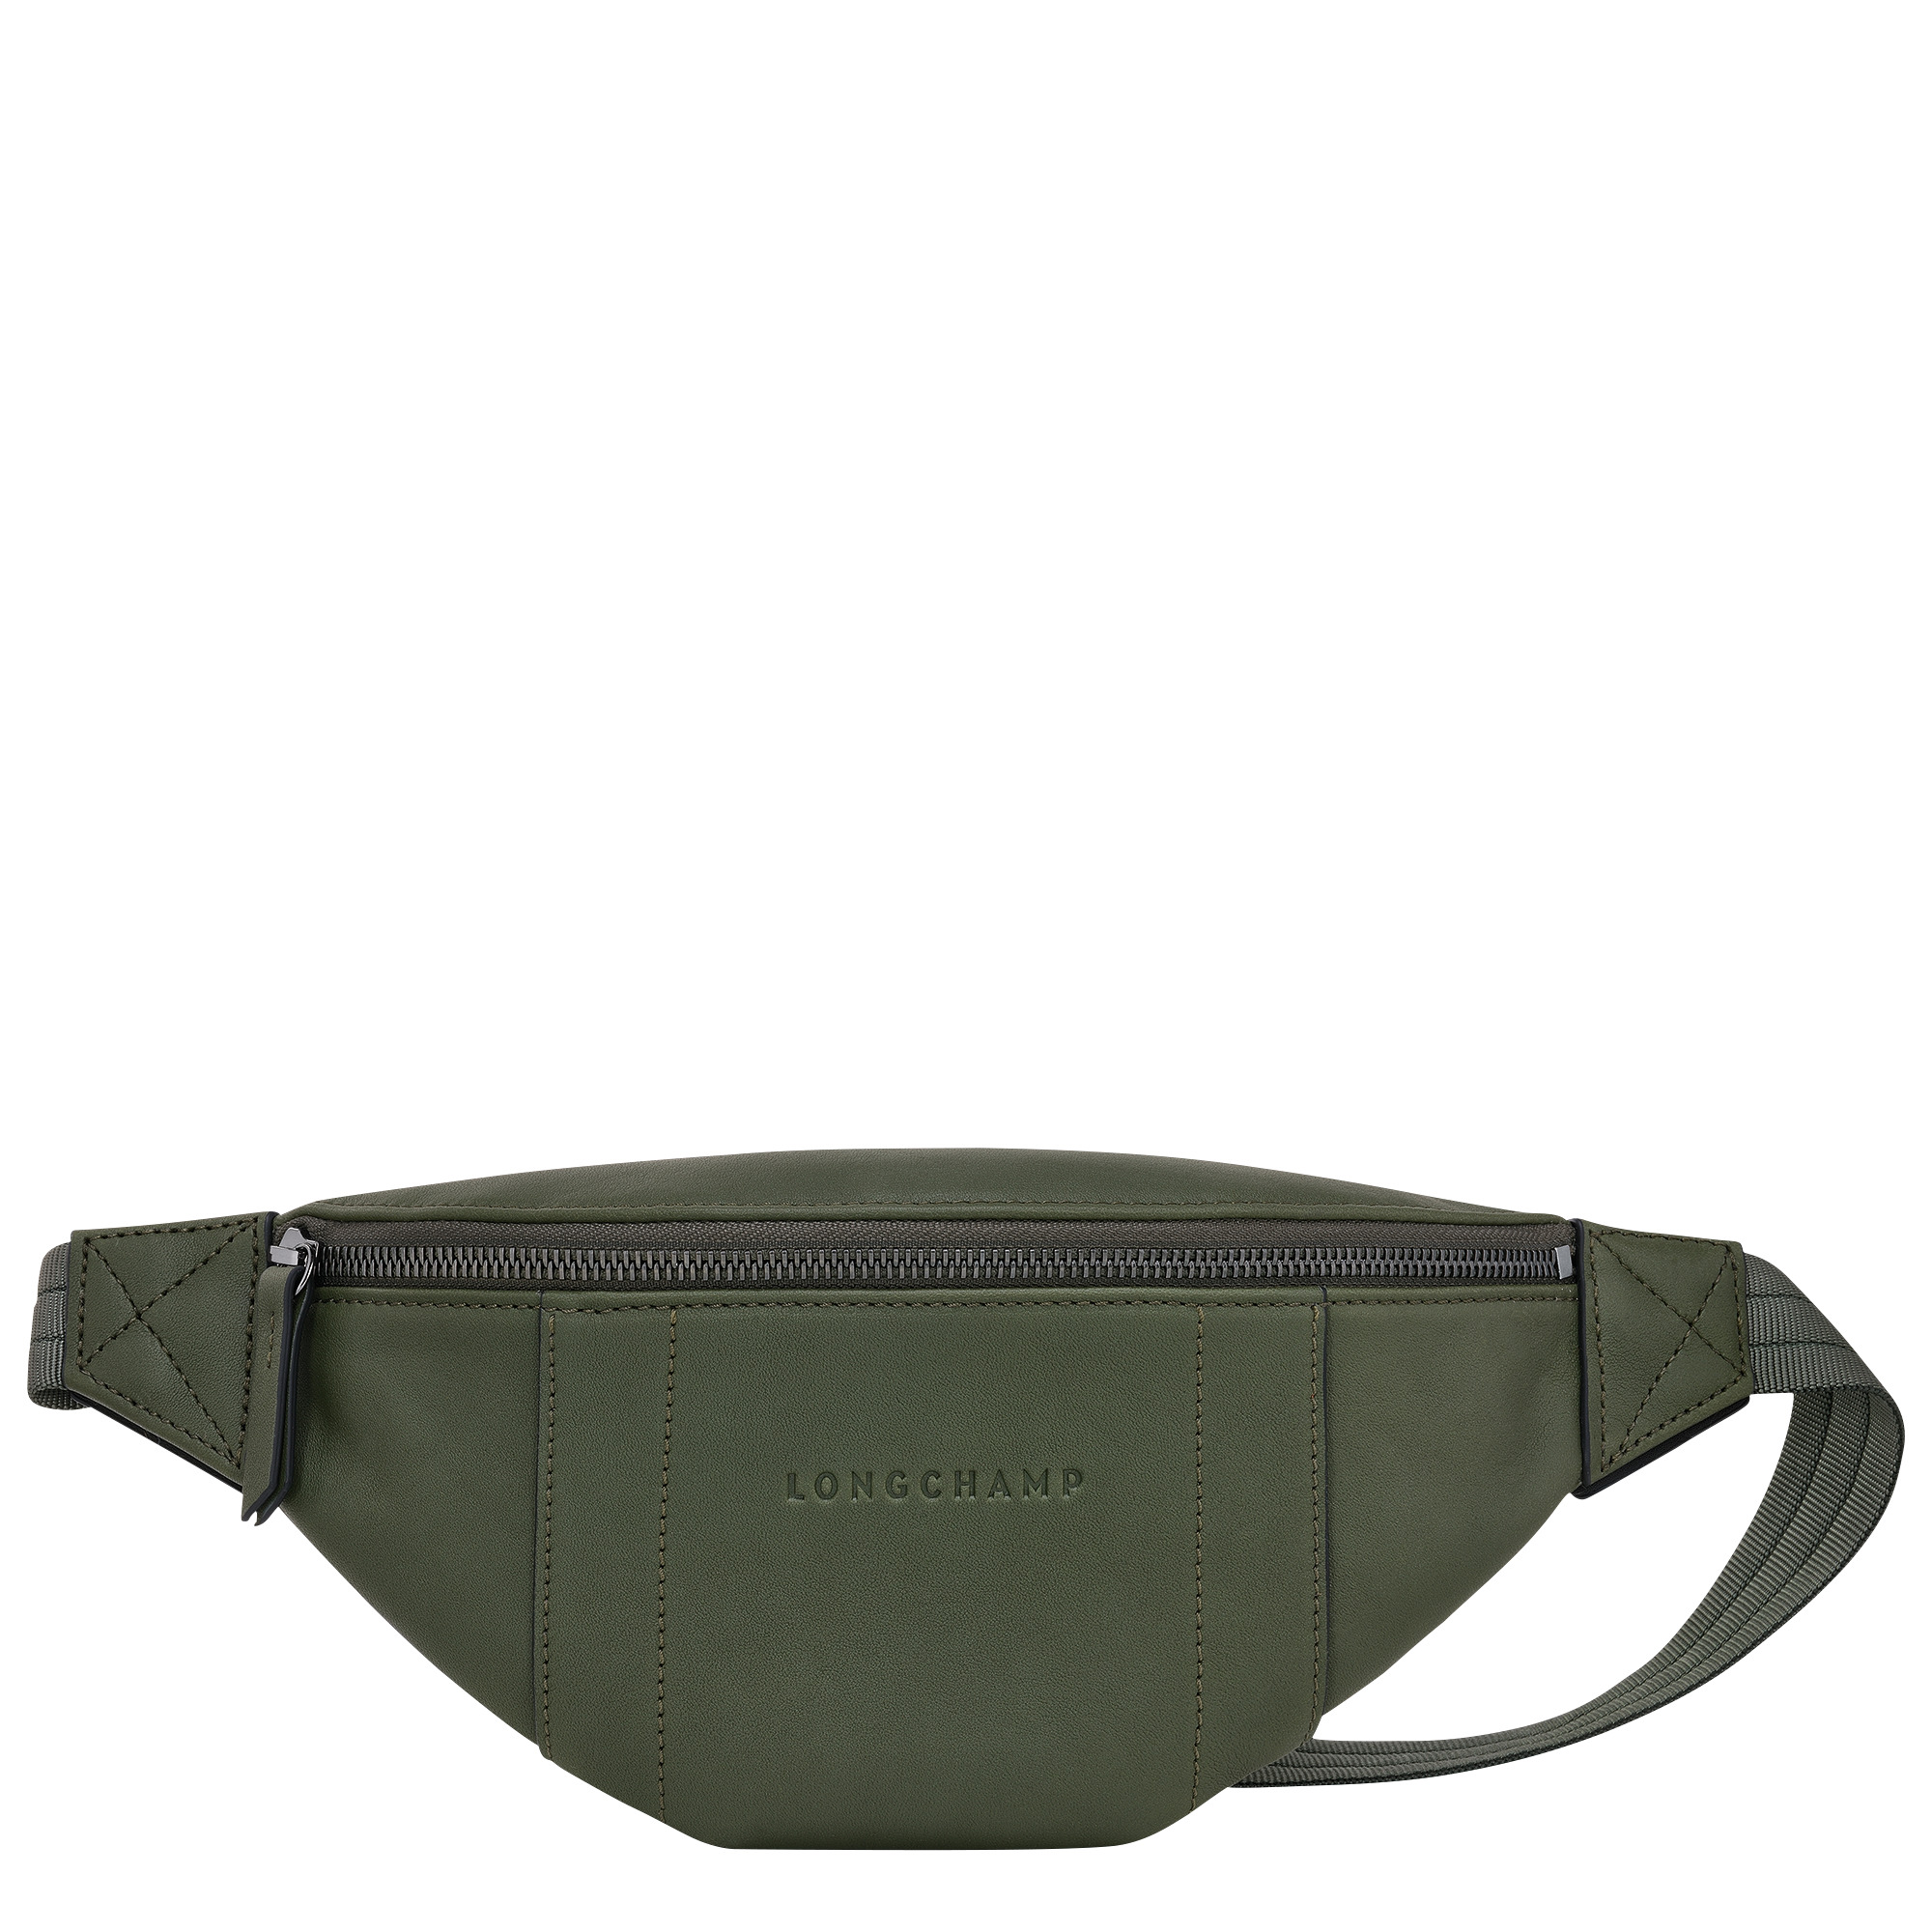 Longchamp 3D S Belt bag Khaki - Leather - 1